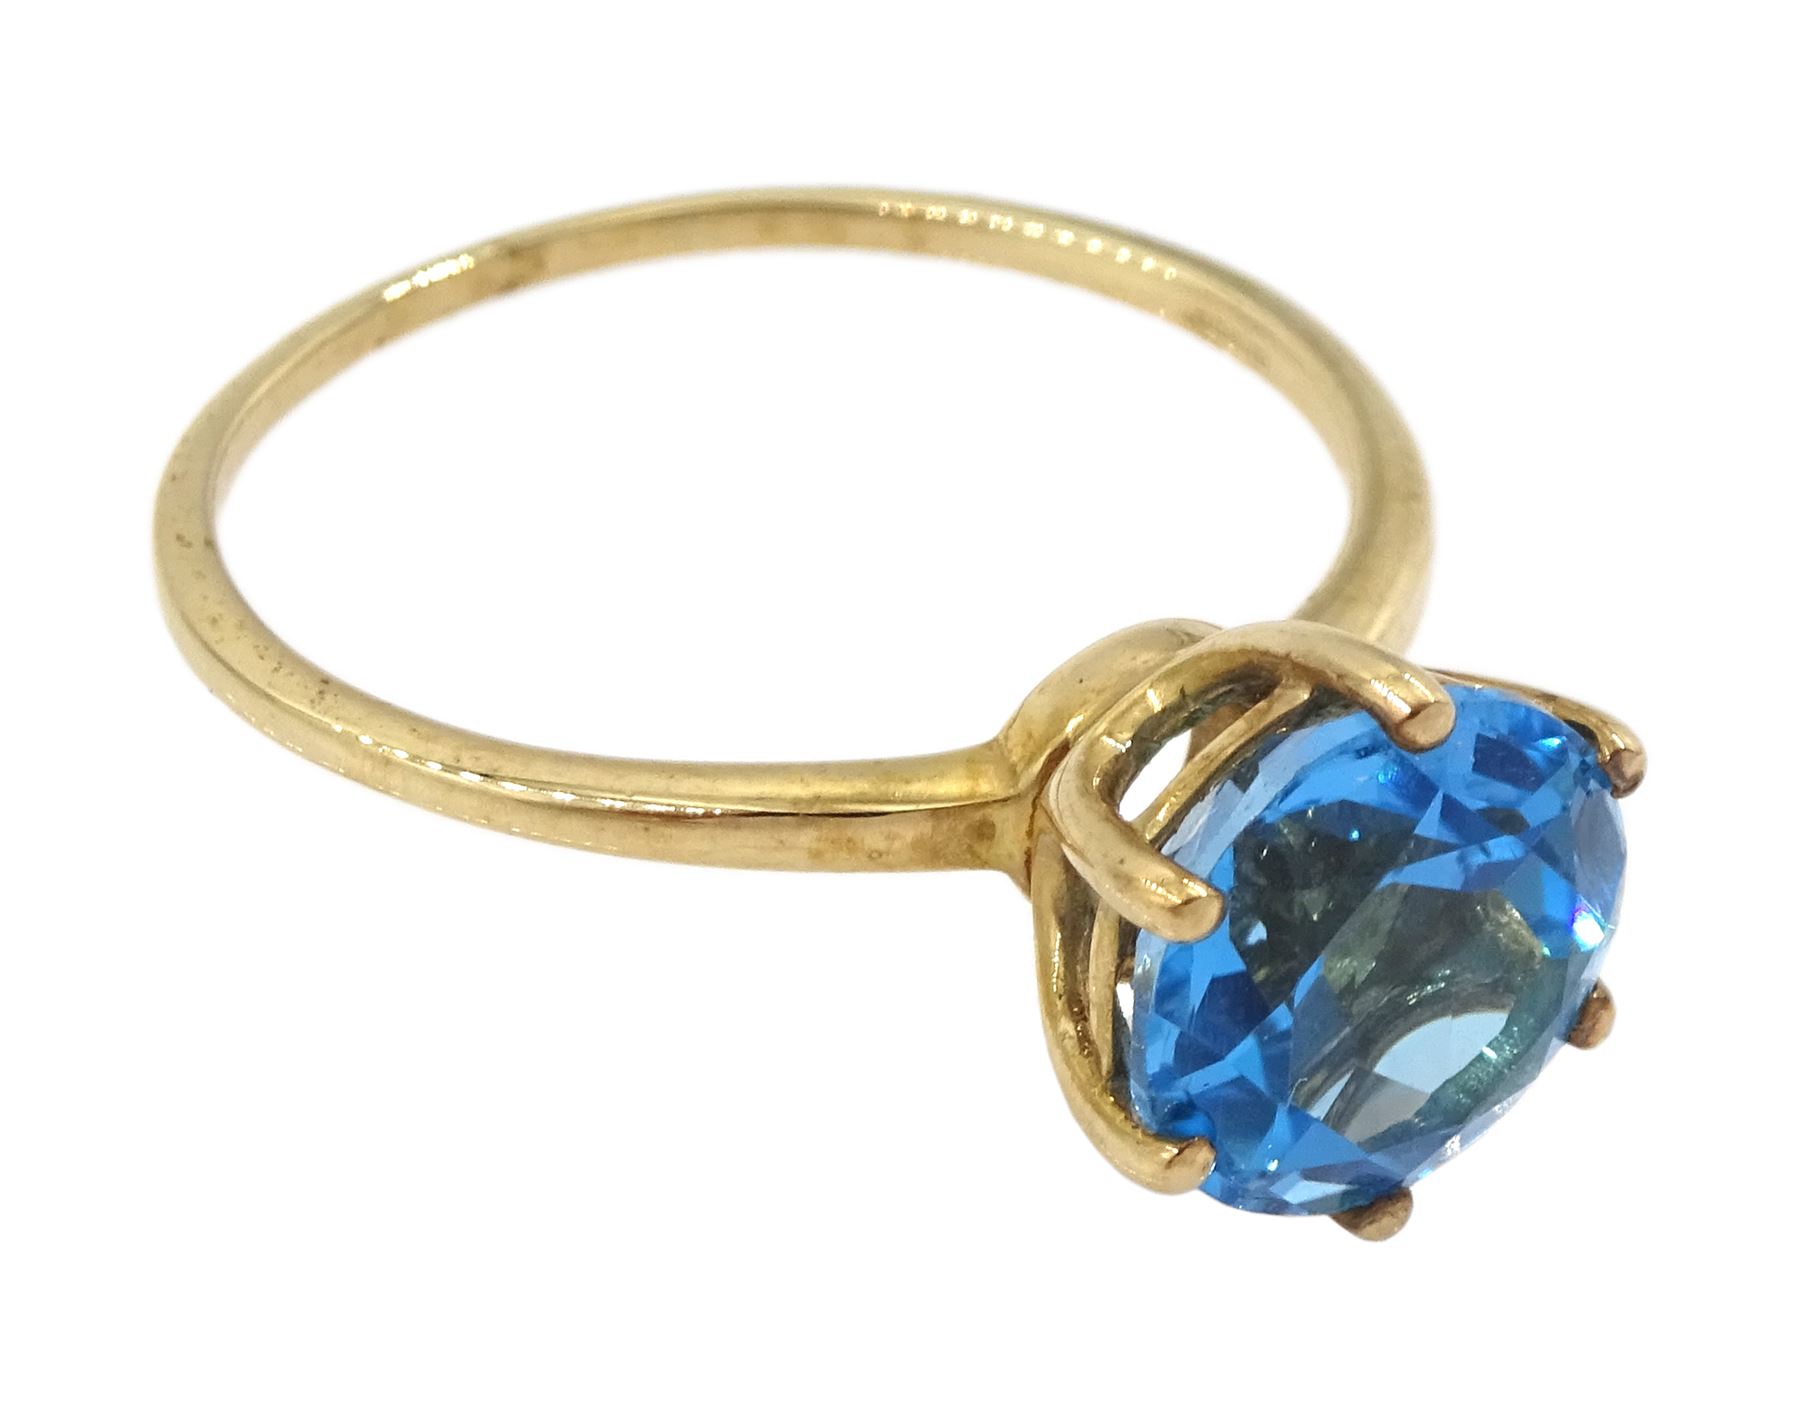 9ct gold single stone round cut Swiss blue topaz ring - Image 3 of 4